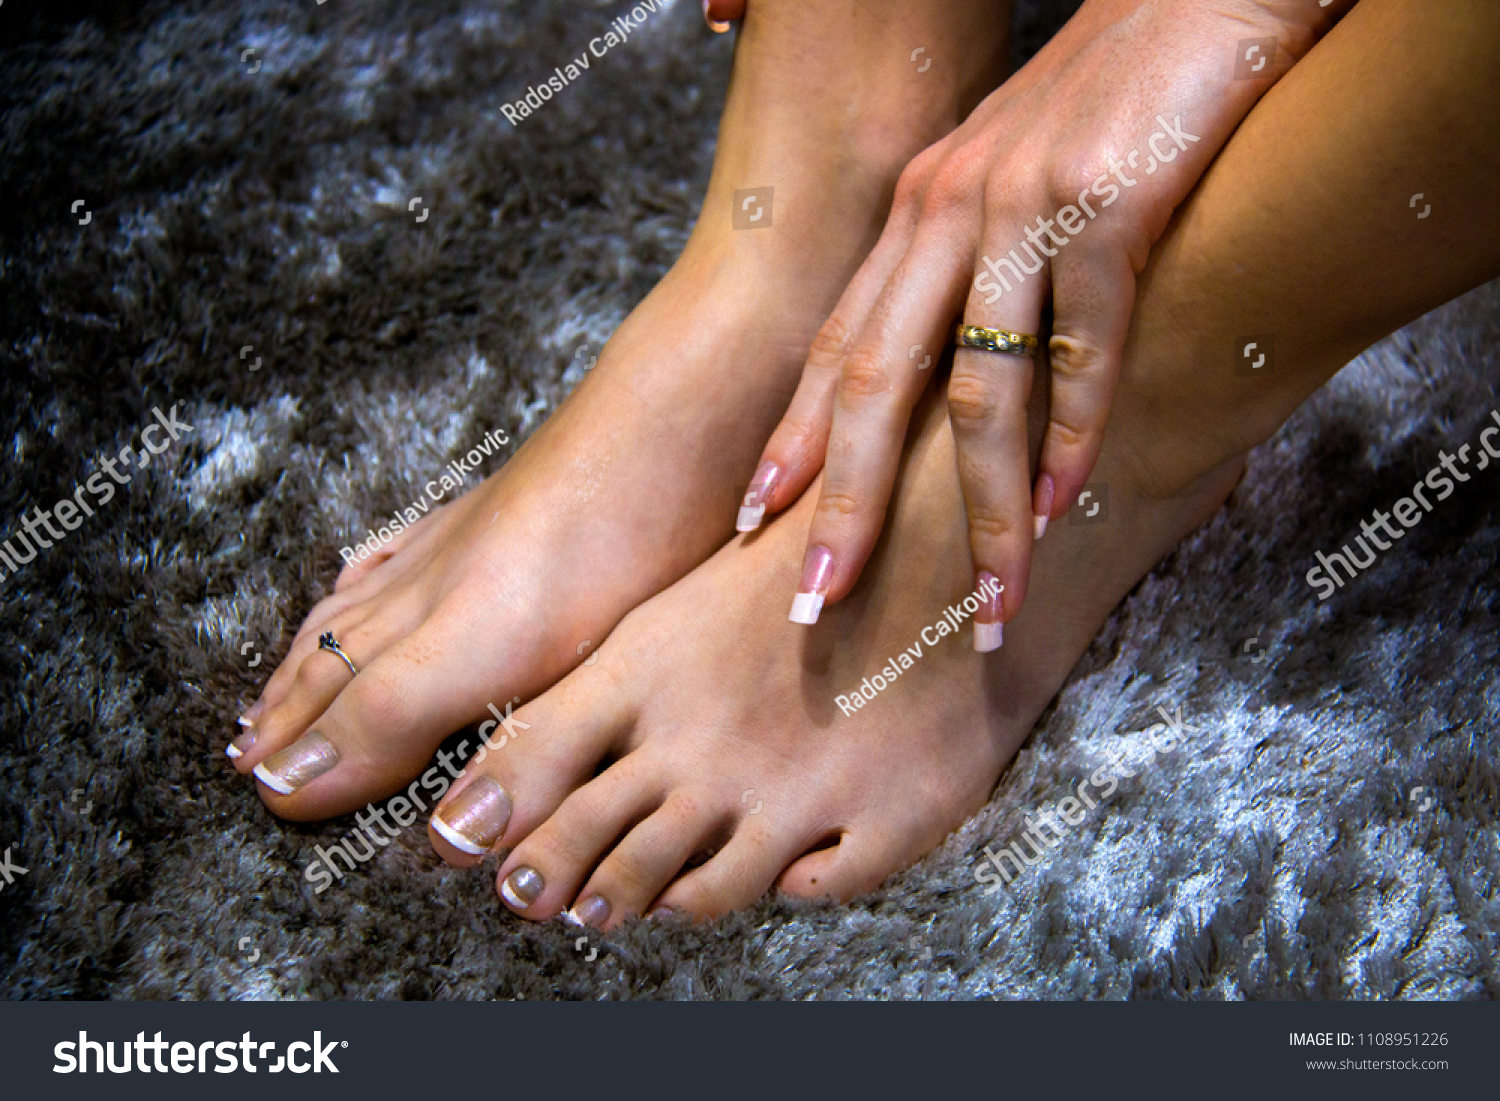 Pretty Girl Feet Pics